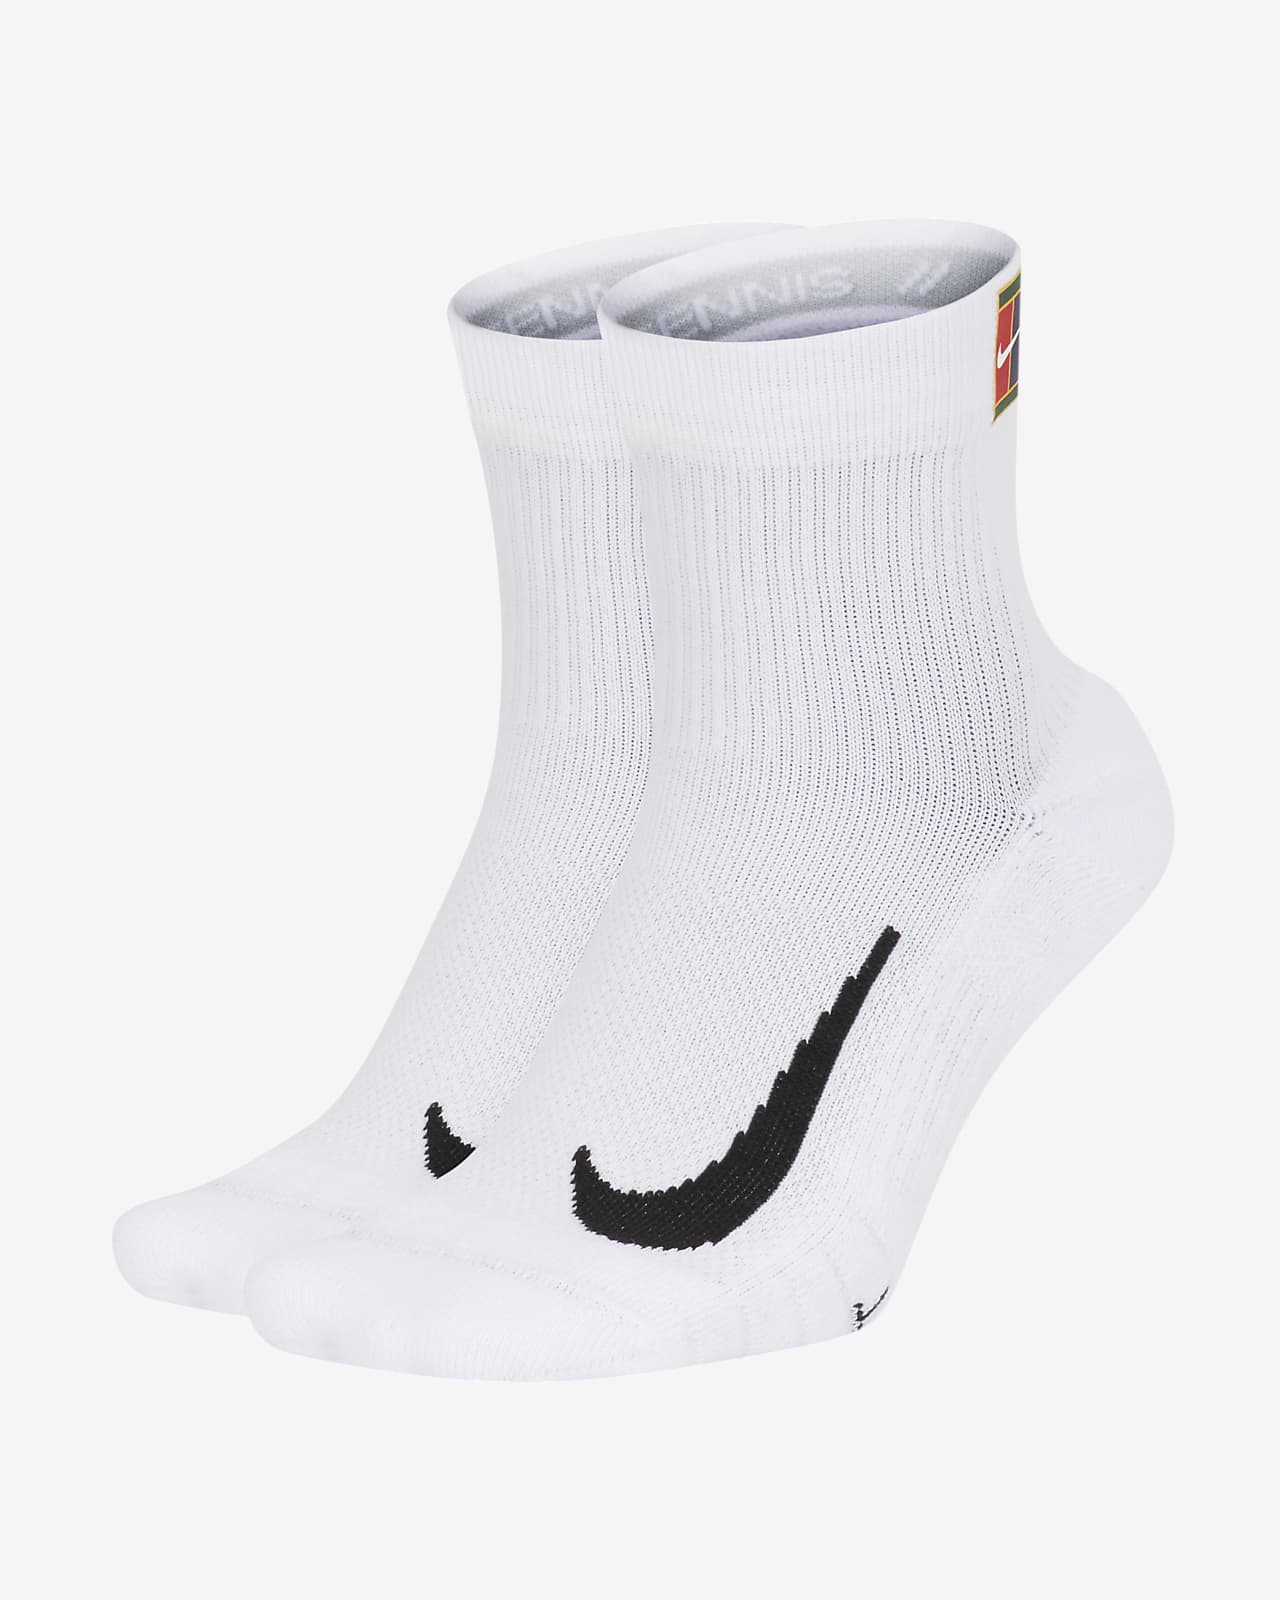 Calze da tennis alla caviglia NikeCourt Multiplier Max (2 paia)